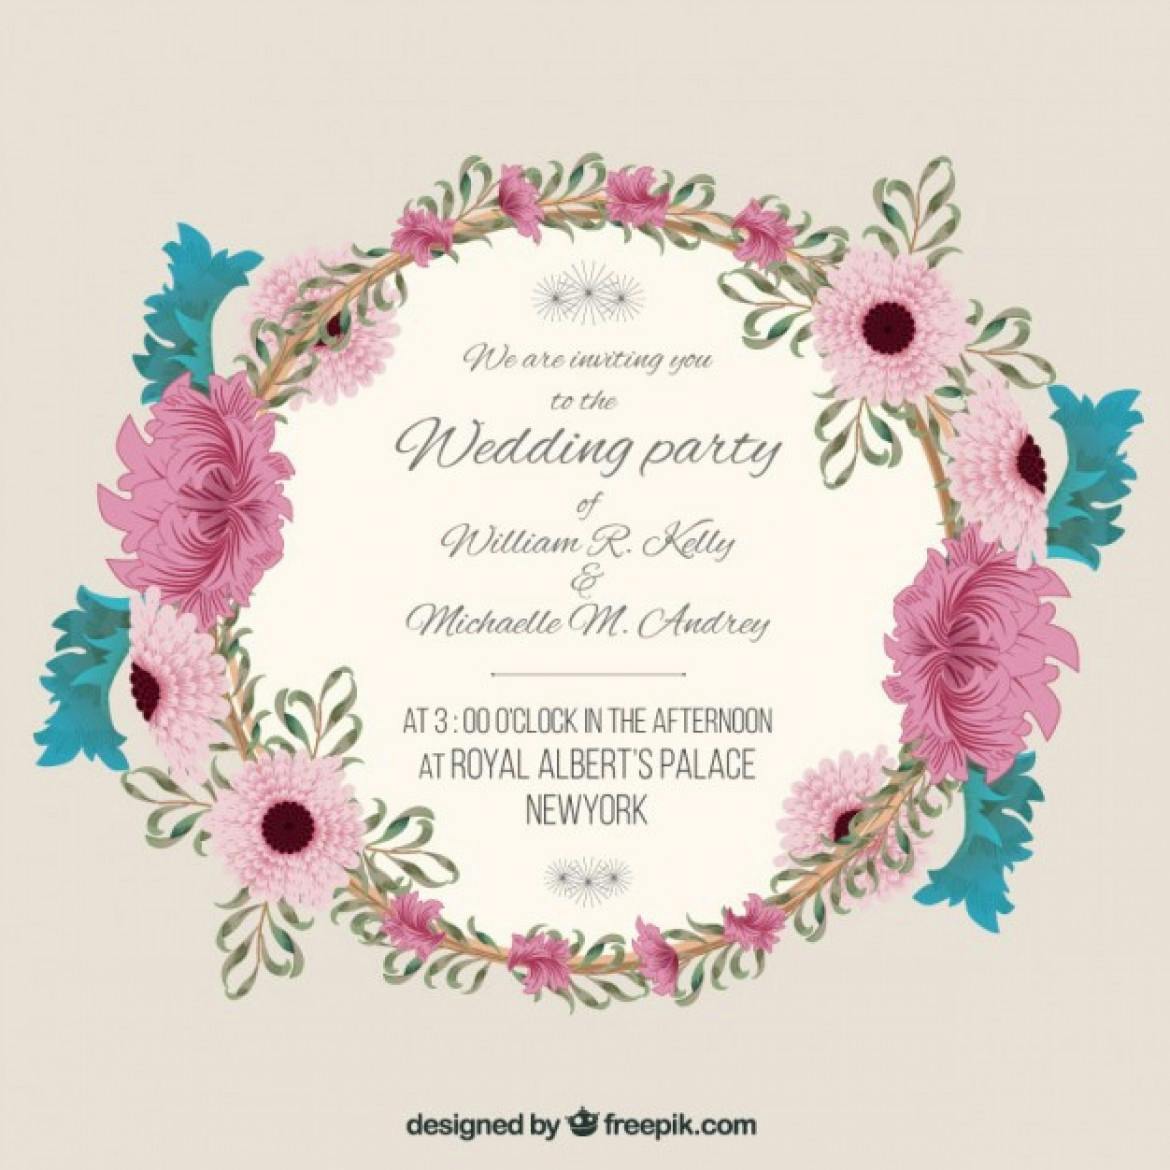 wpid-wedding-invitation-with-floral-frame_23-2147505606-1170x1170